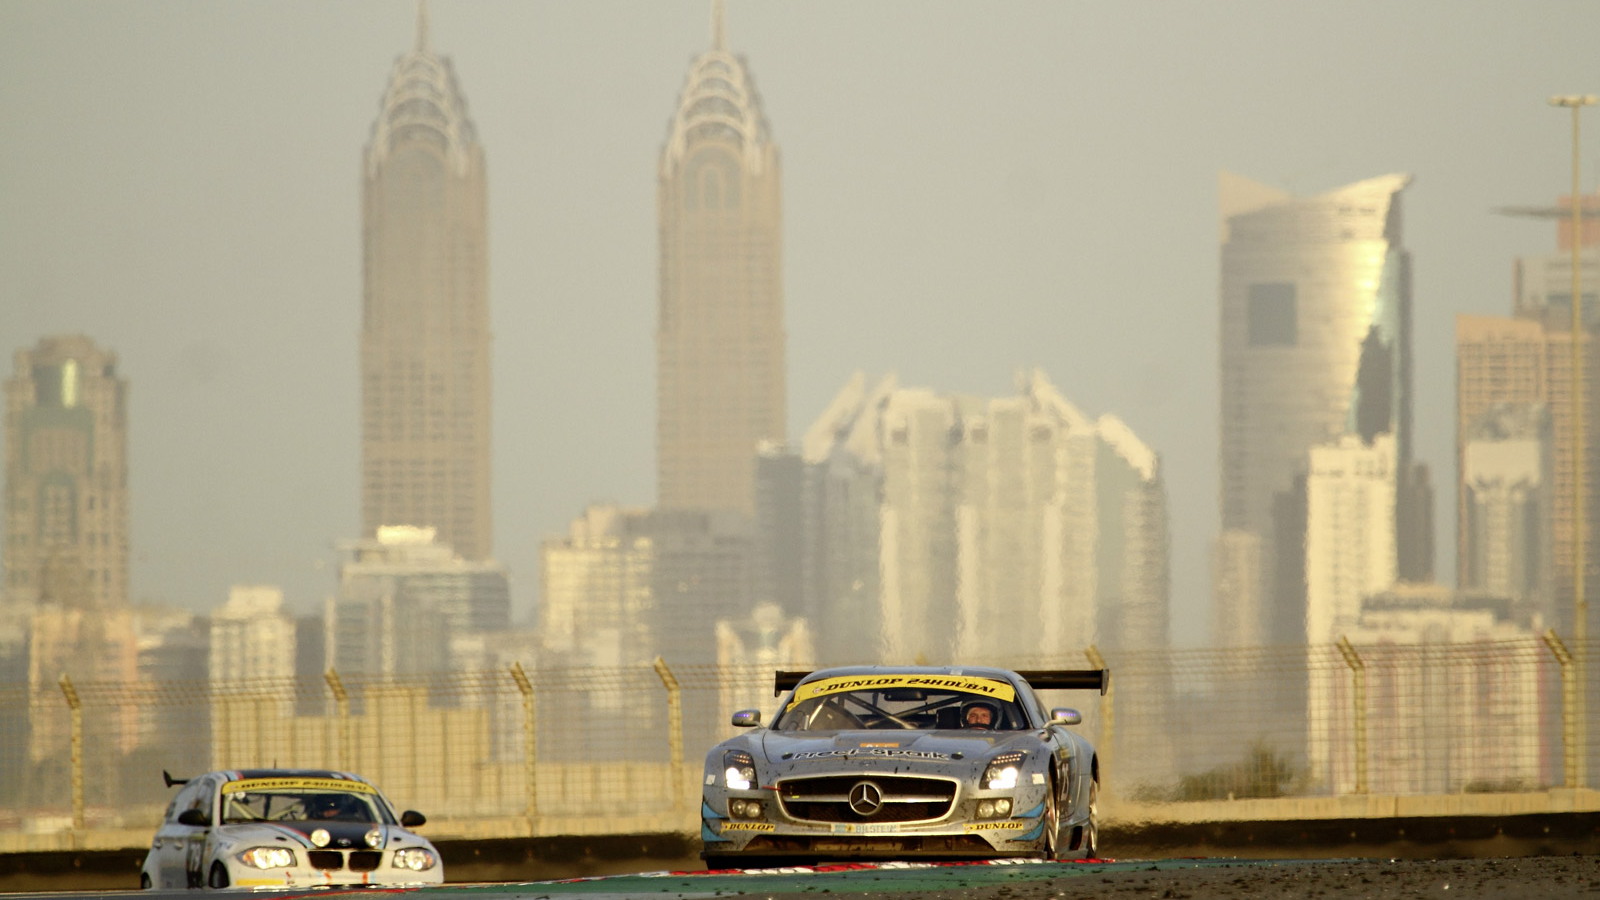 AMG customer teams at the 2013 Dubai 24 Hours endurance race